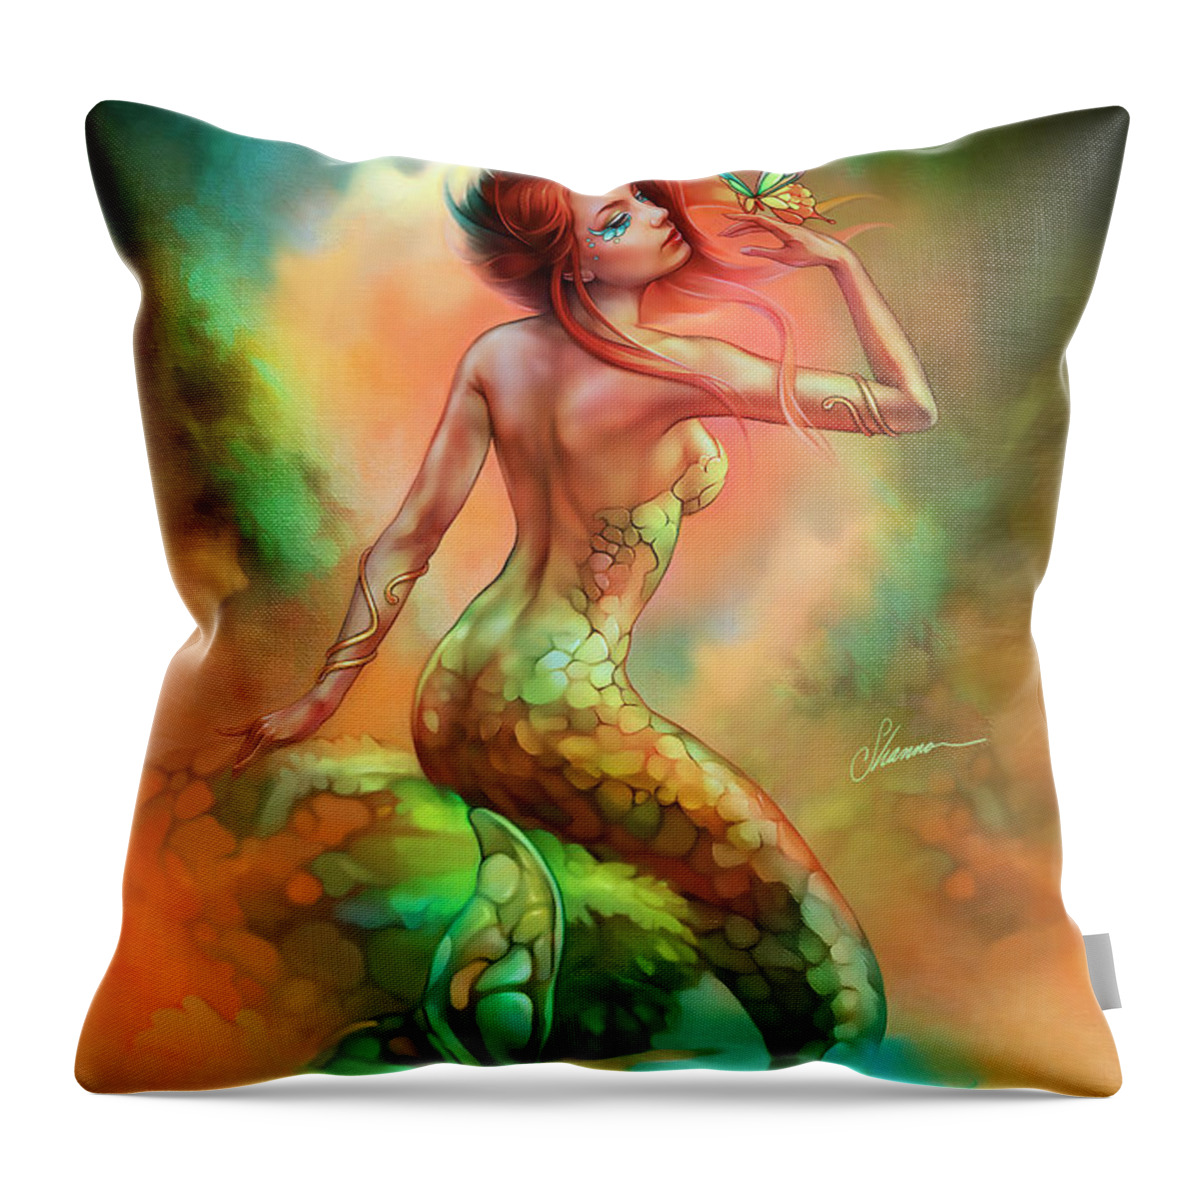 Mermaid Throw Pillow featuring the digital art Mermaid's Wish by Shannon Maer